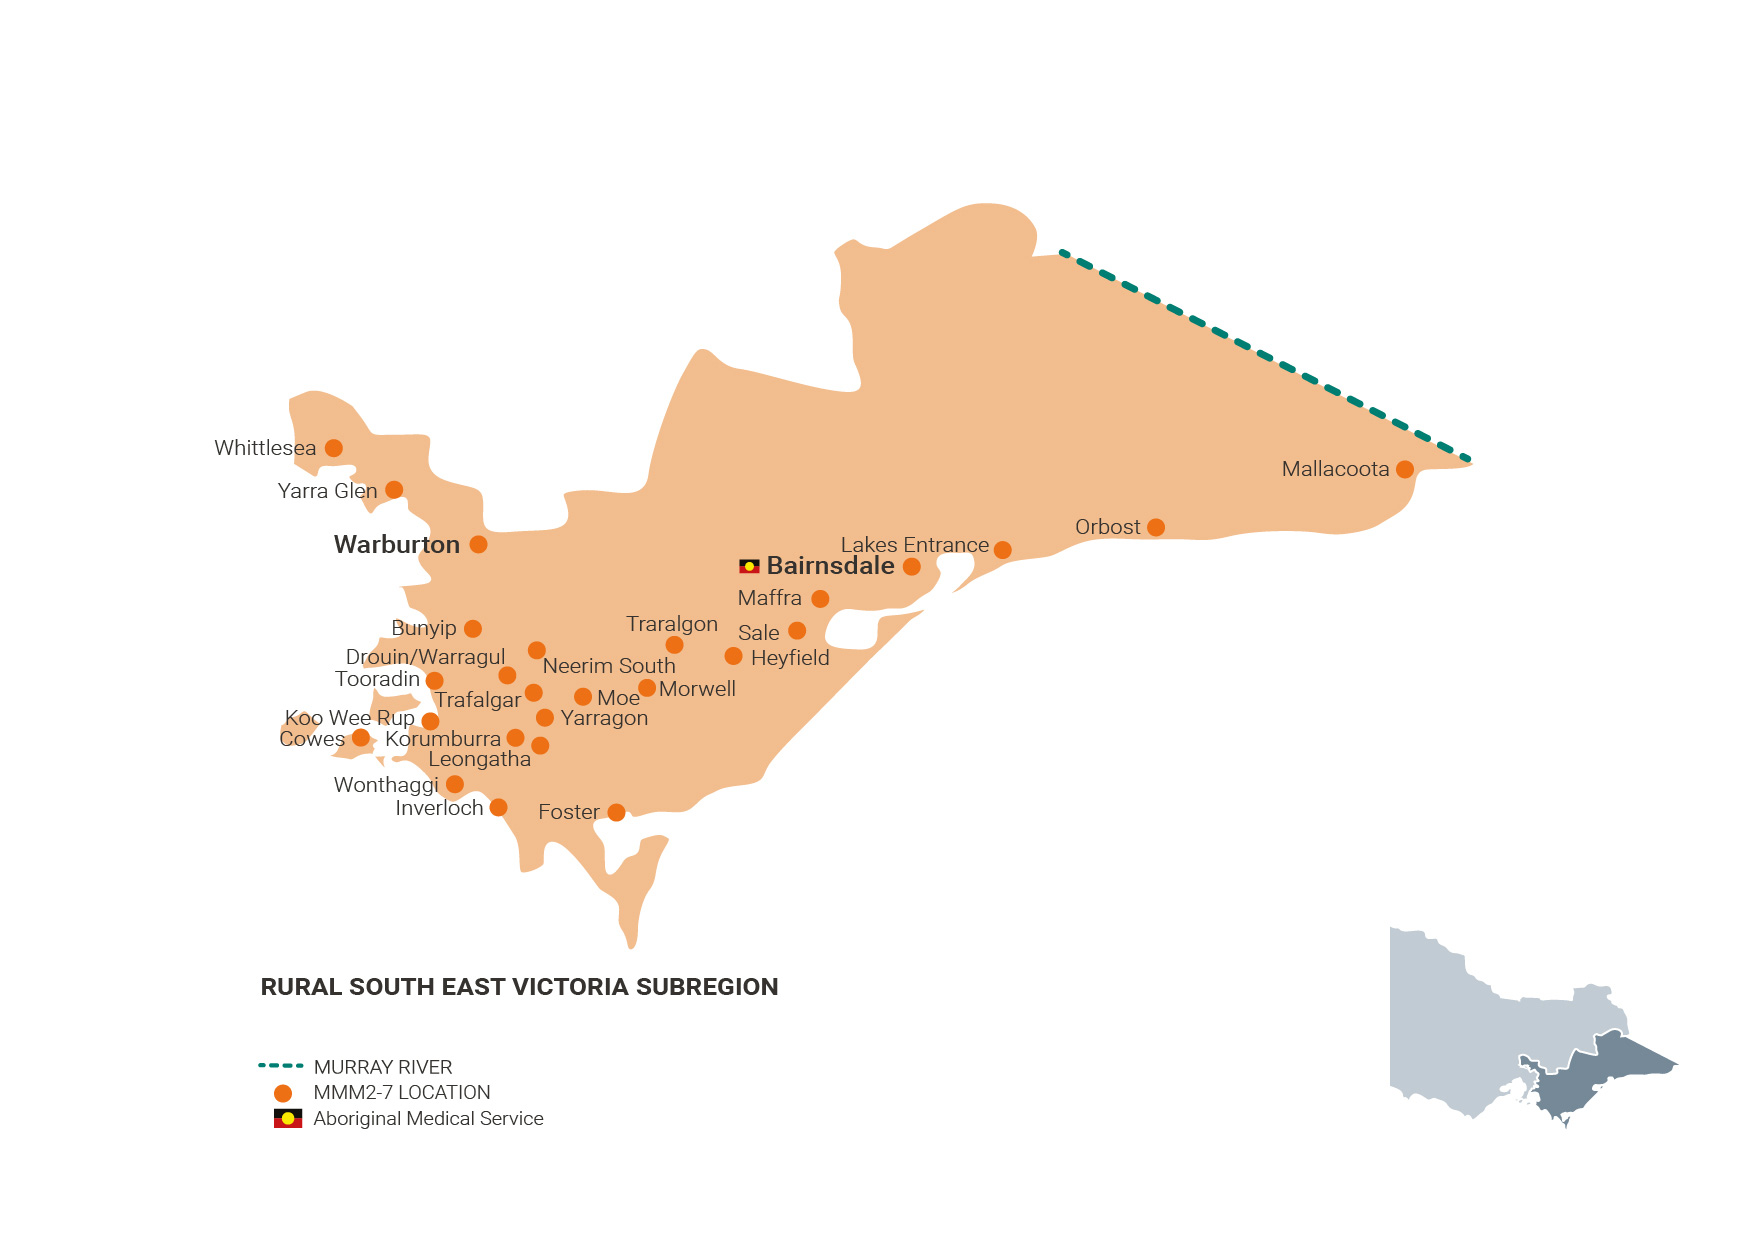 Rural South East Victoria subregion